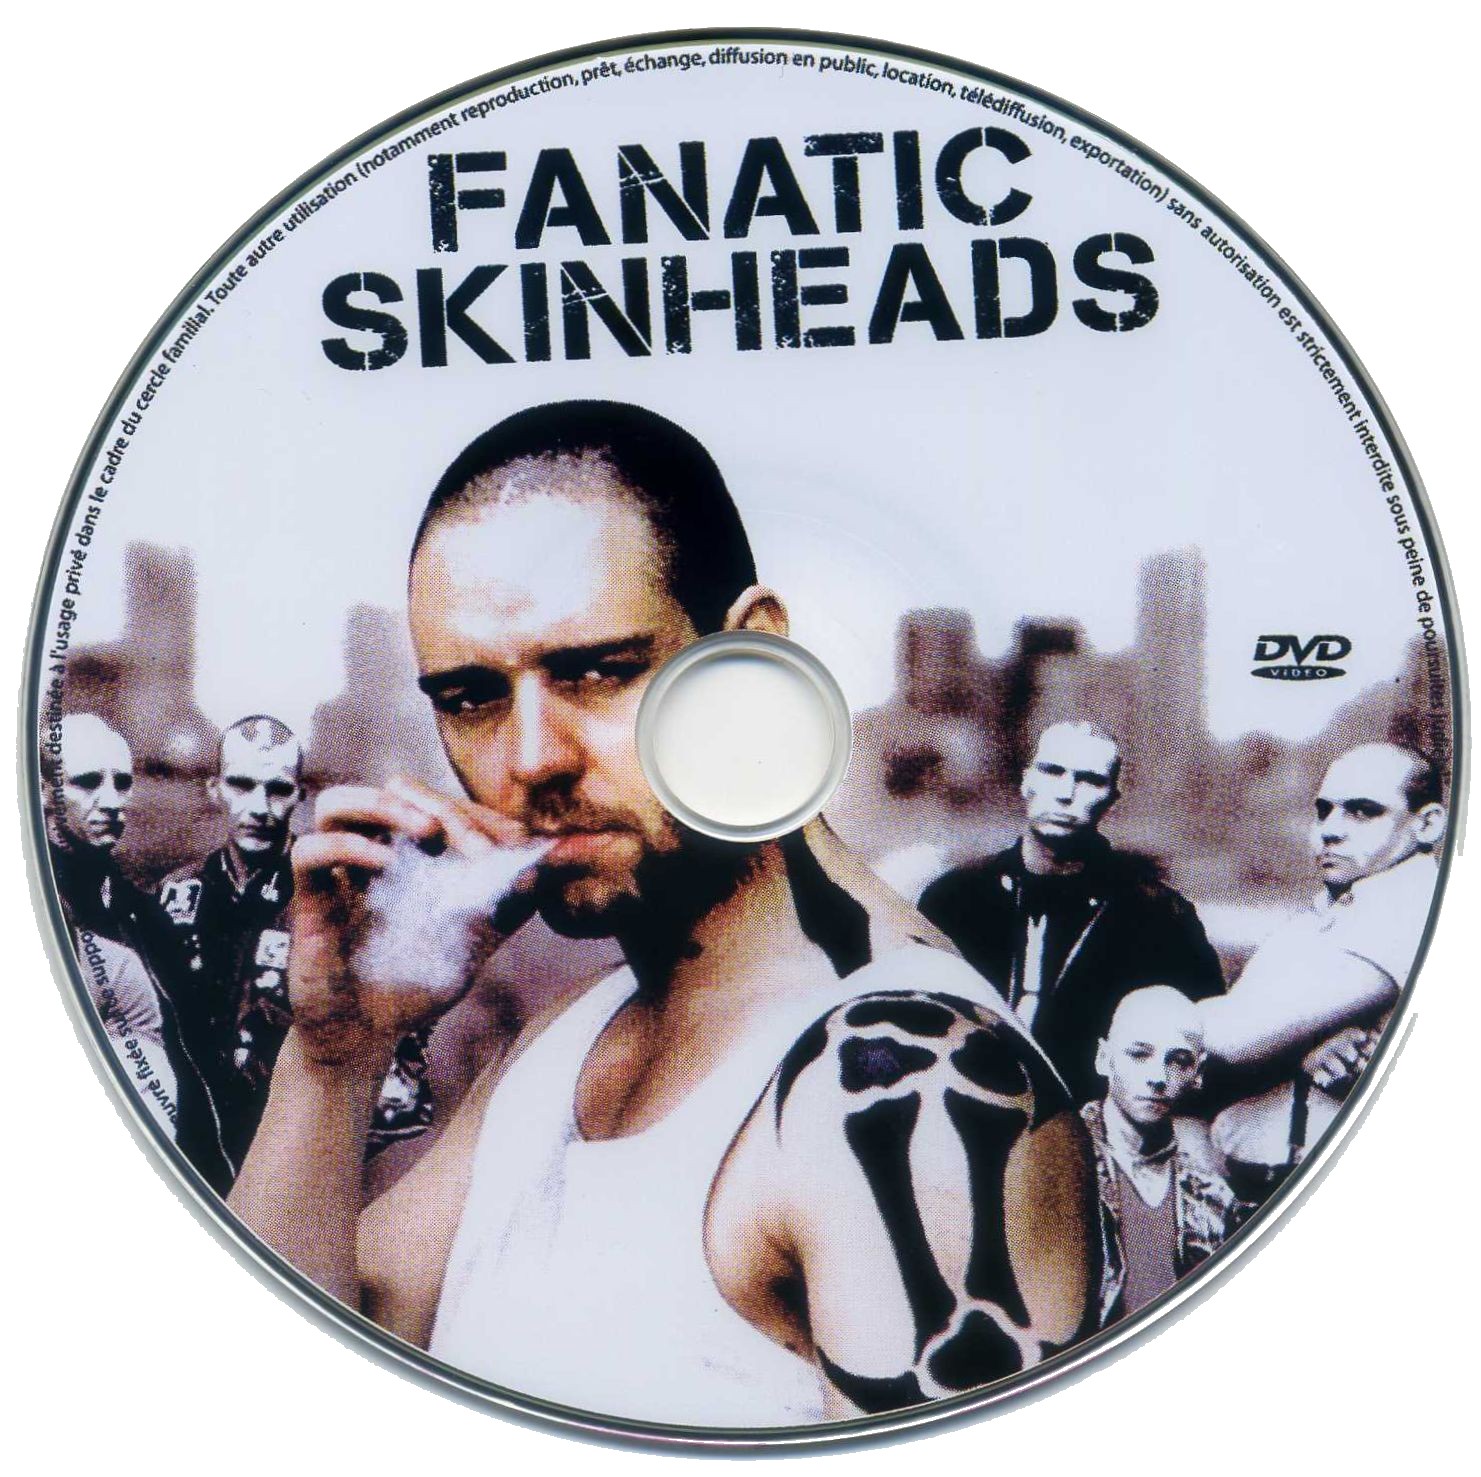 Fanatic skinheads